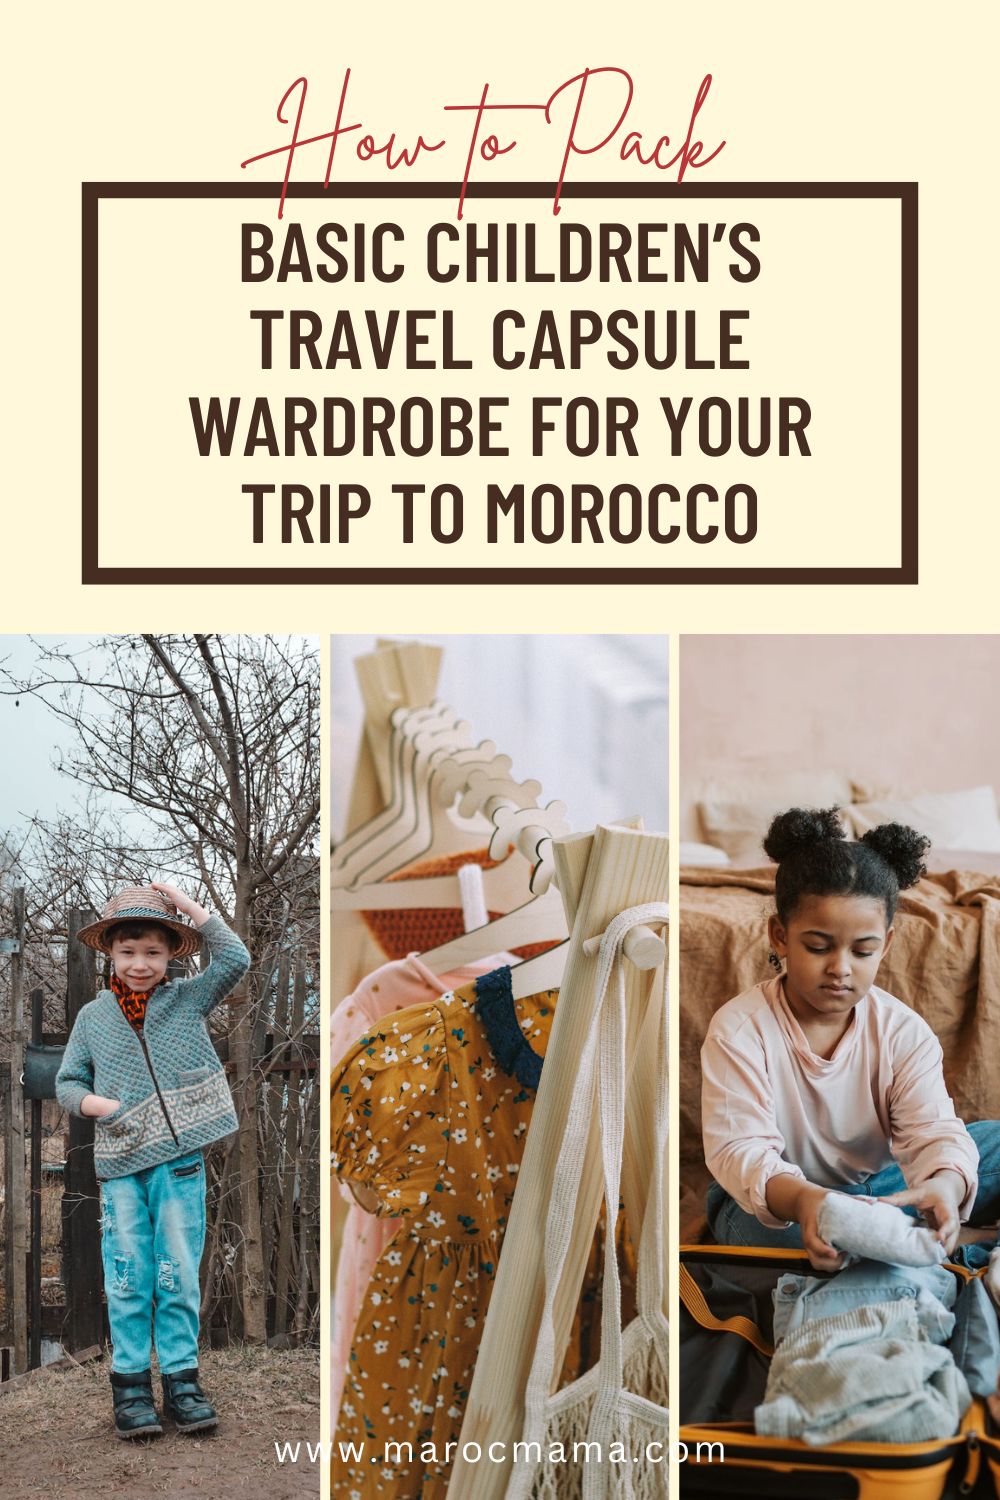 Children's travel capsule wardrobe for Morocco Trip